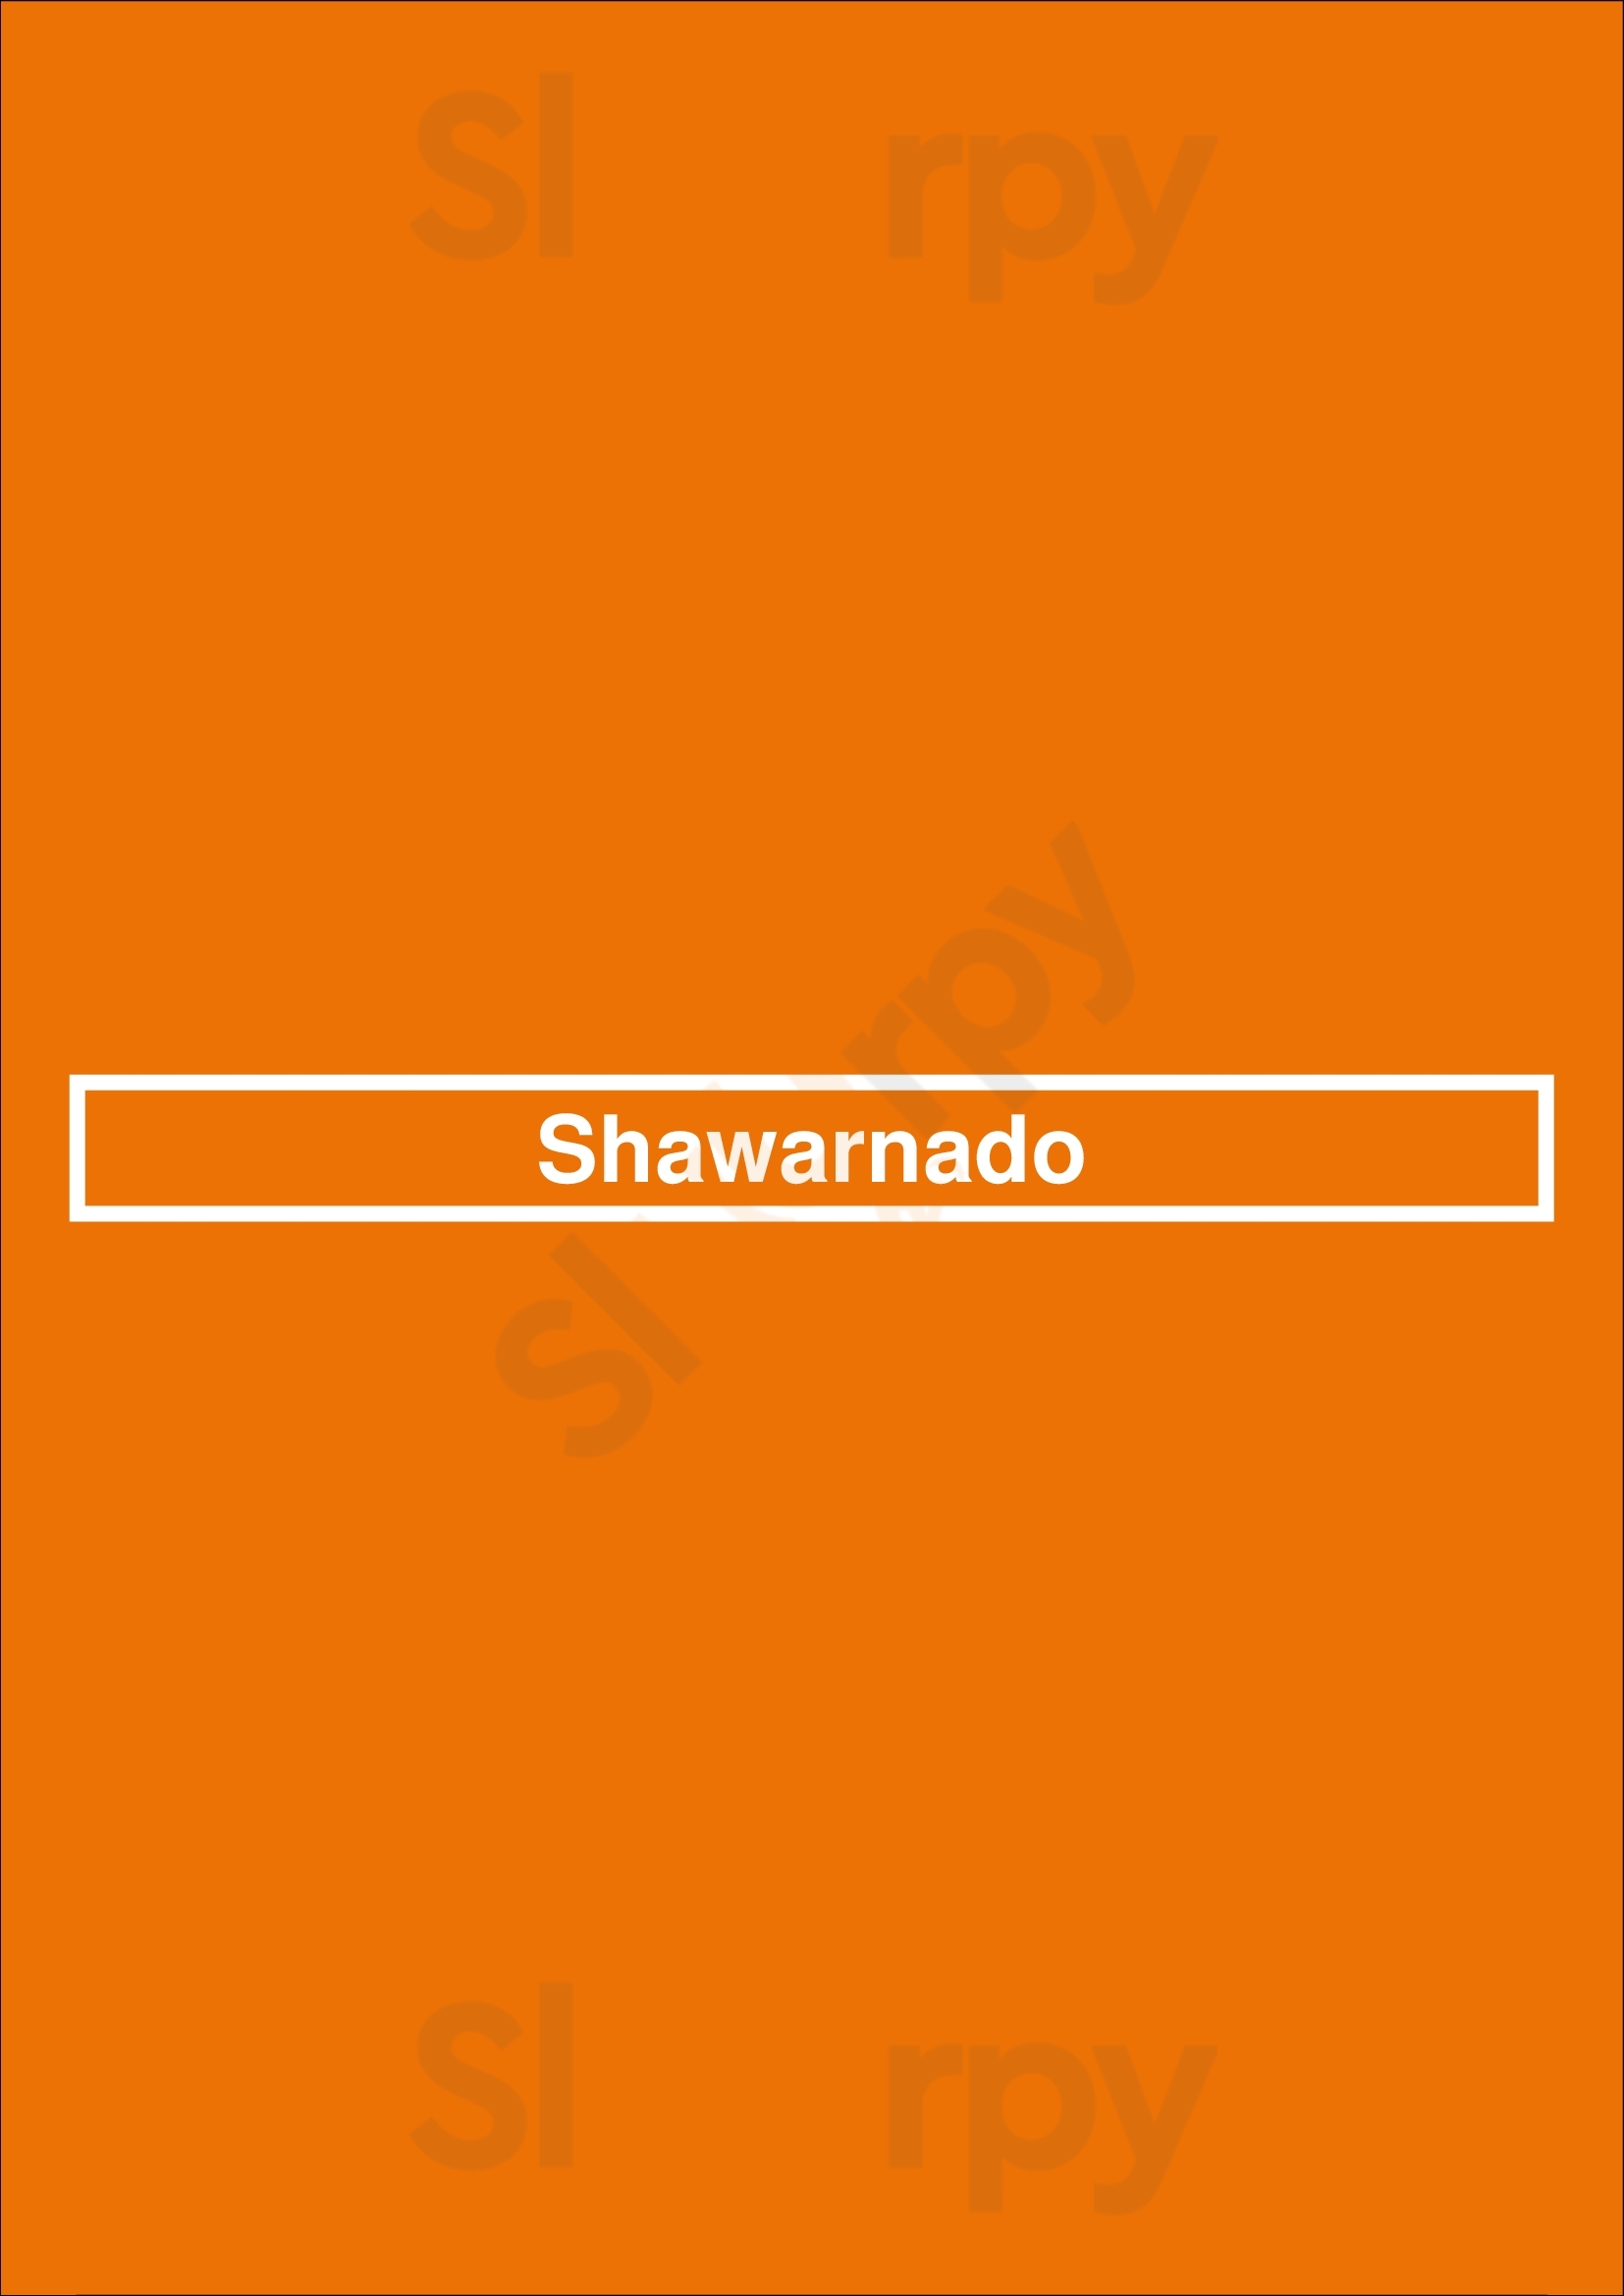 Shawarnado Mississauga Menu - 1